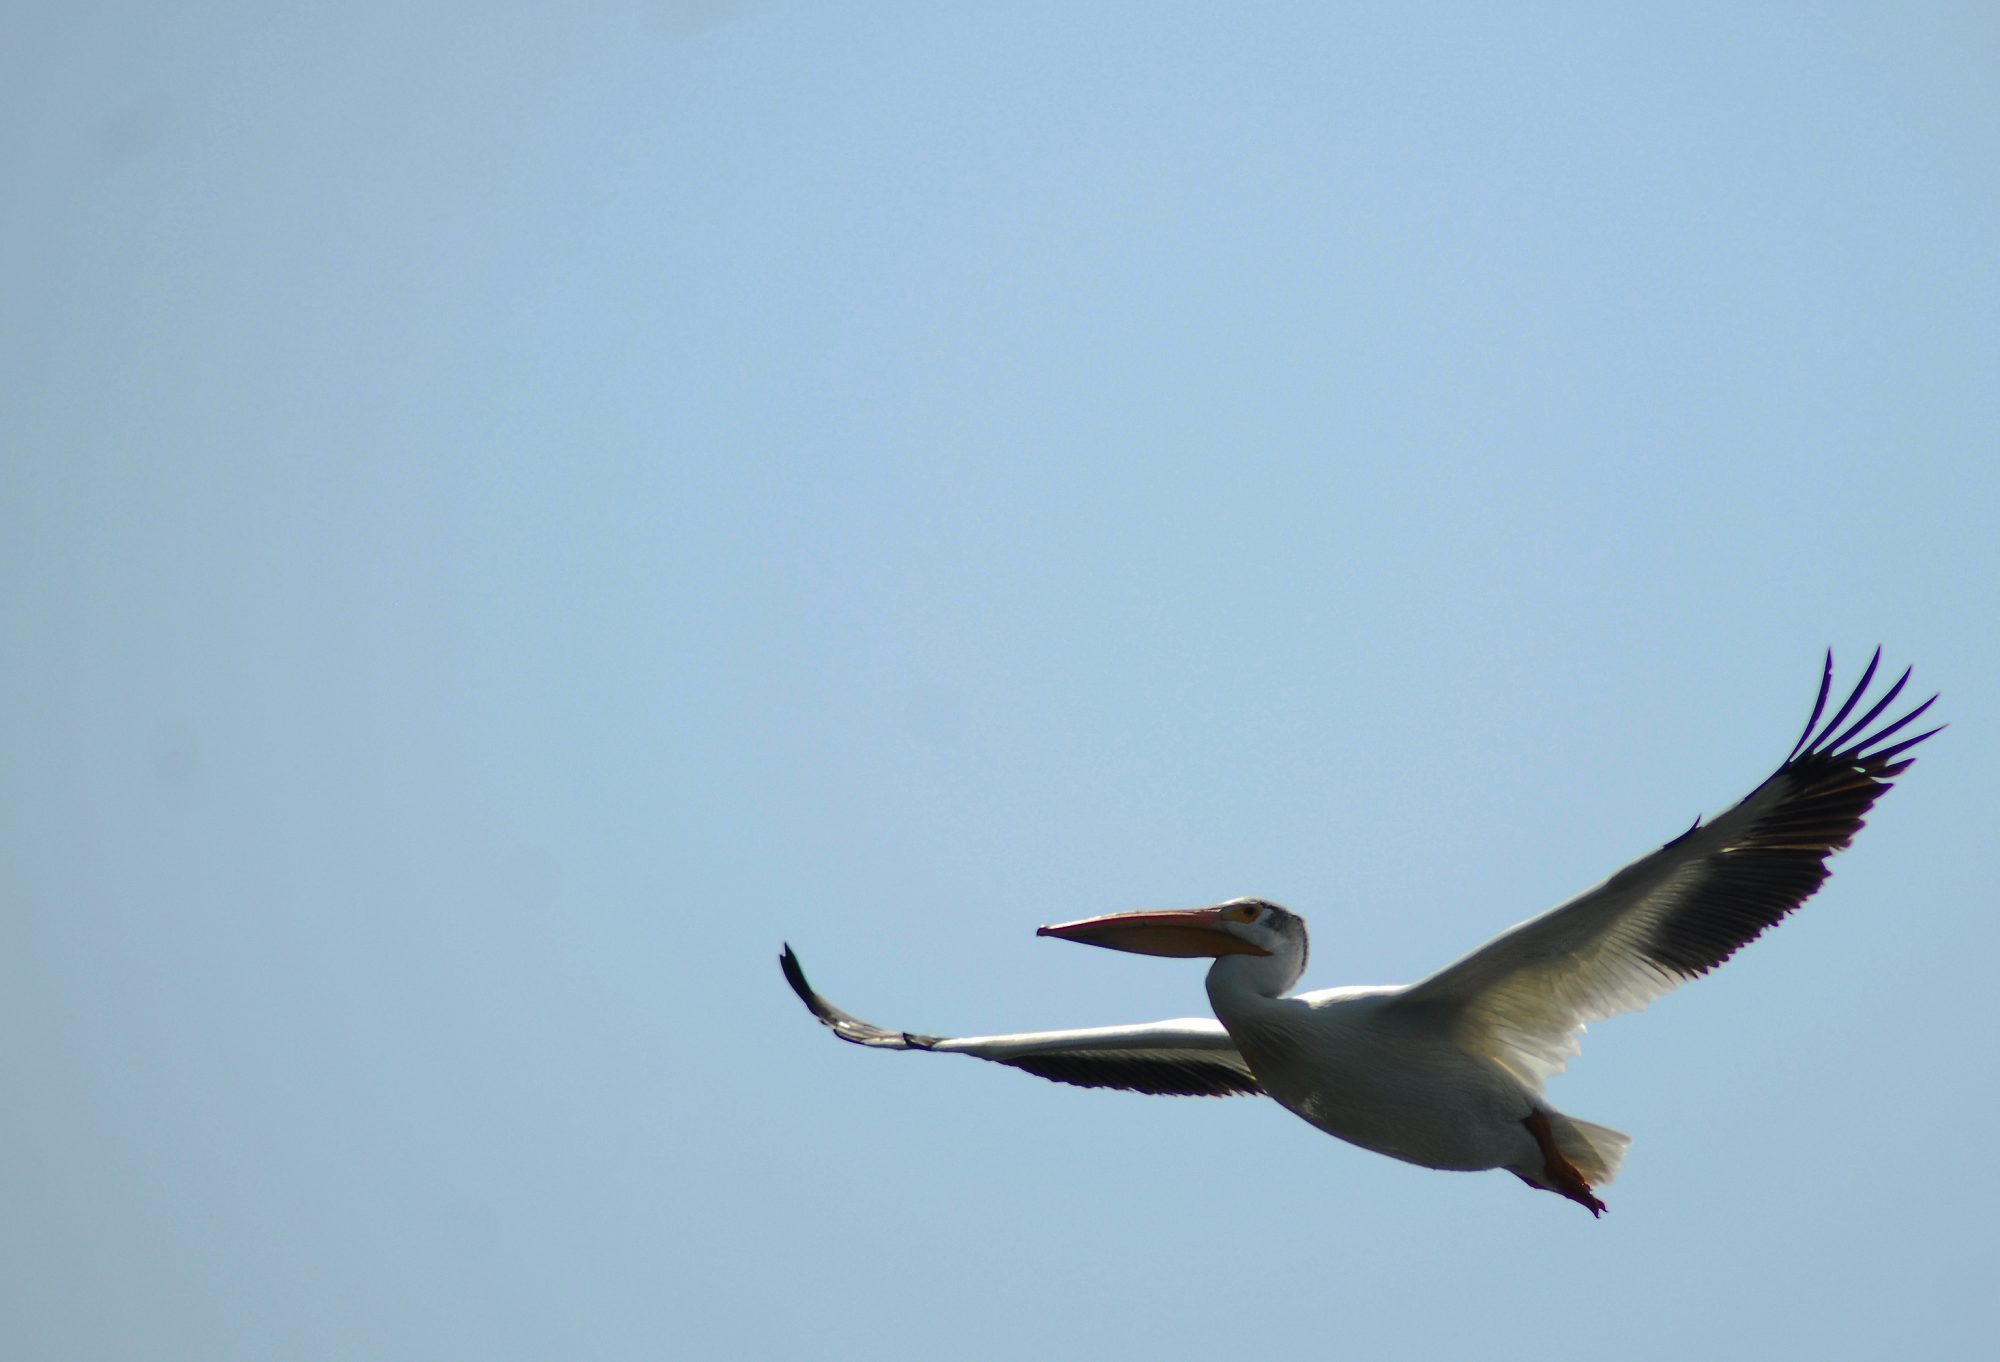 White American Pelican 2, Barr Lake, CO 2016